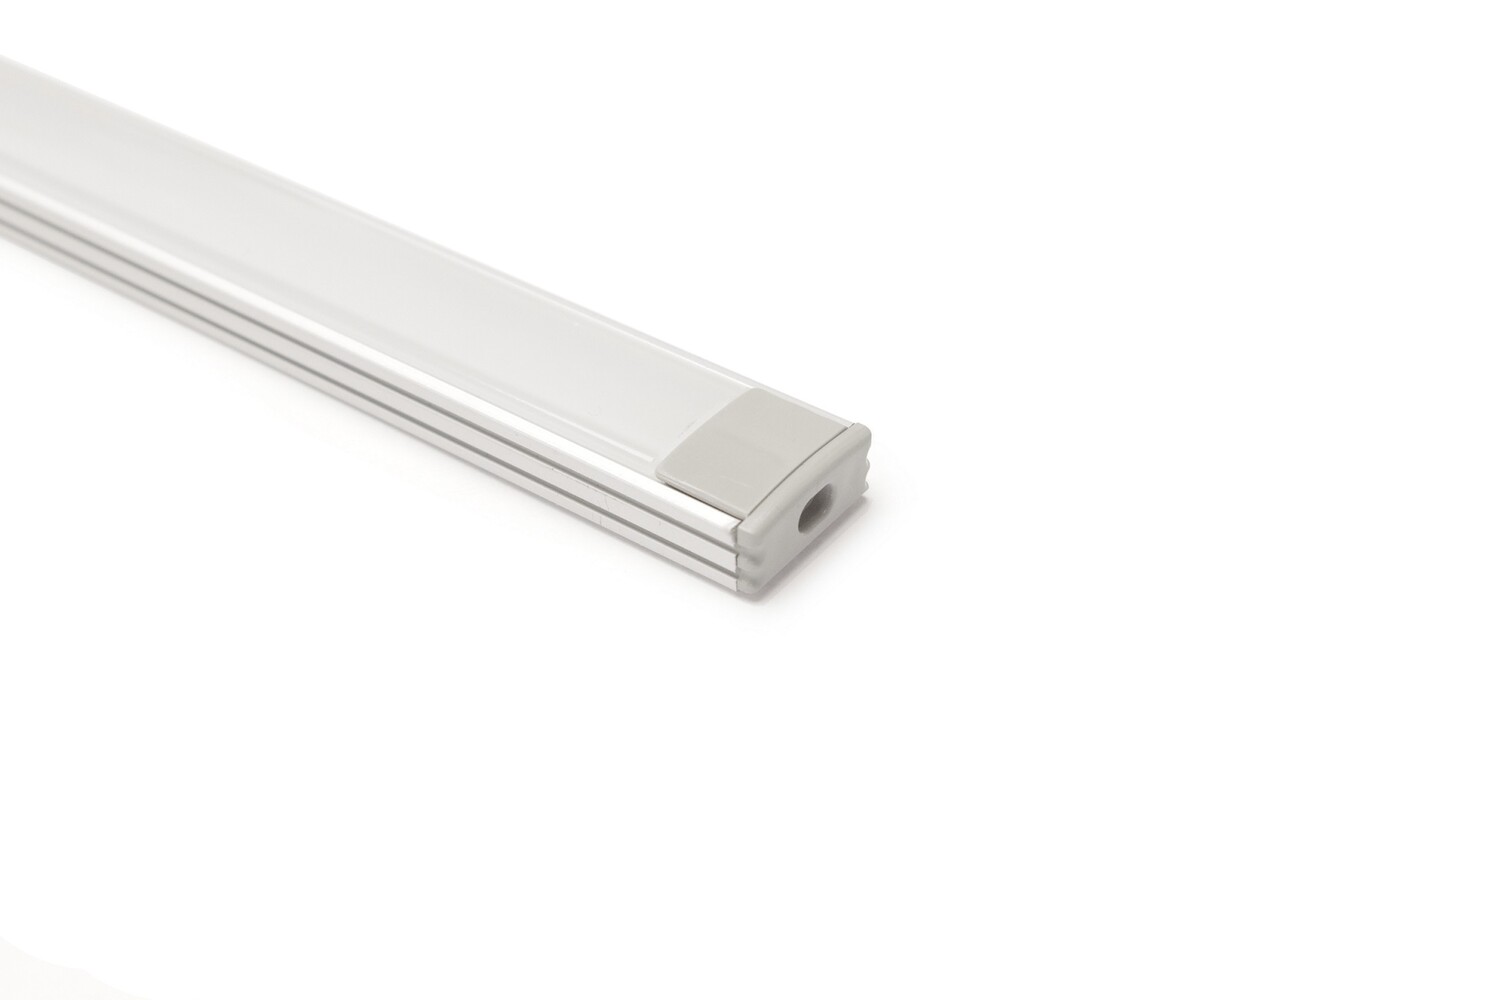 Hochwertiges LED Profil von LED Universum, Aluminium U Profil 1m Länge 17 5 x 7mm